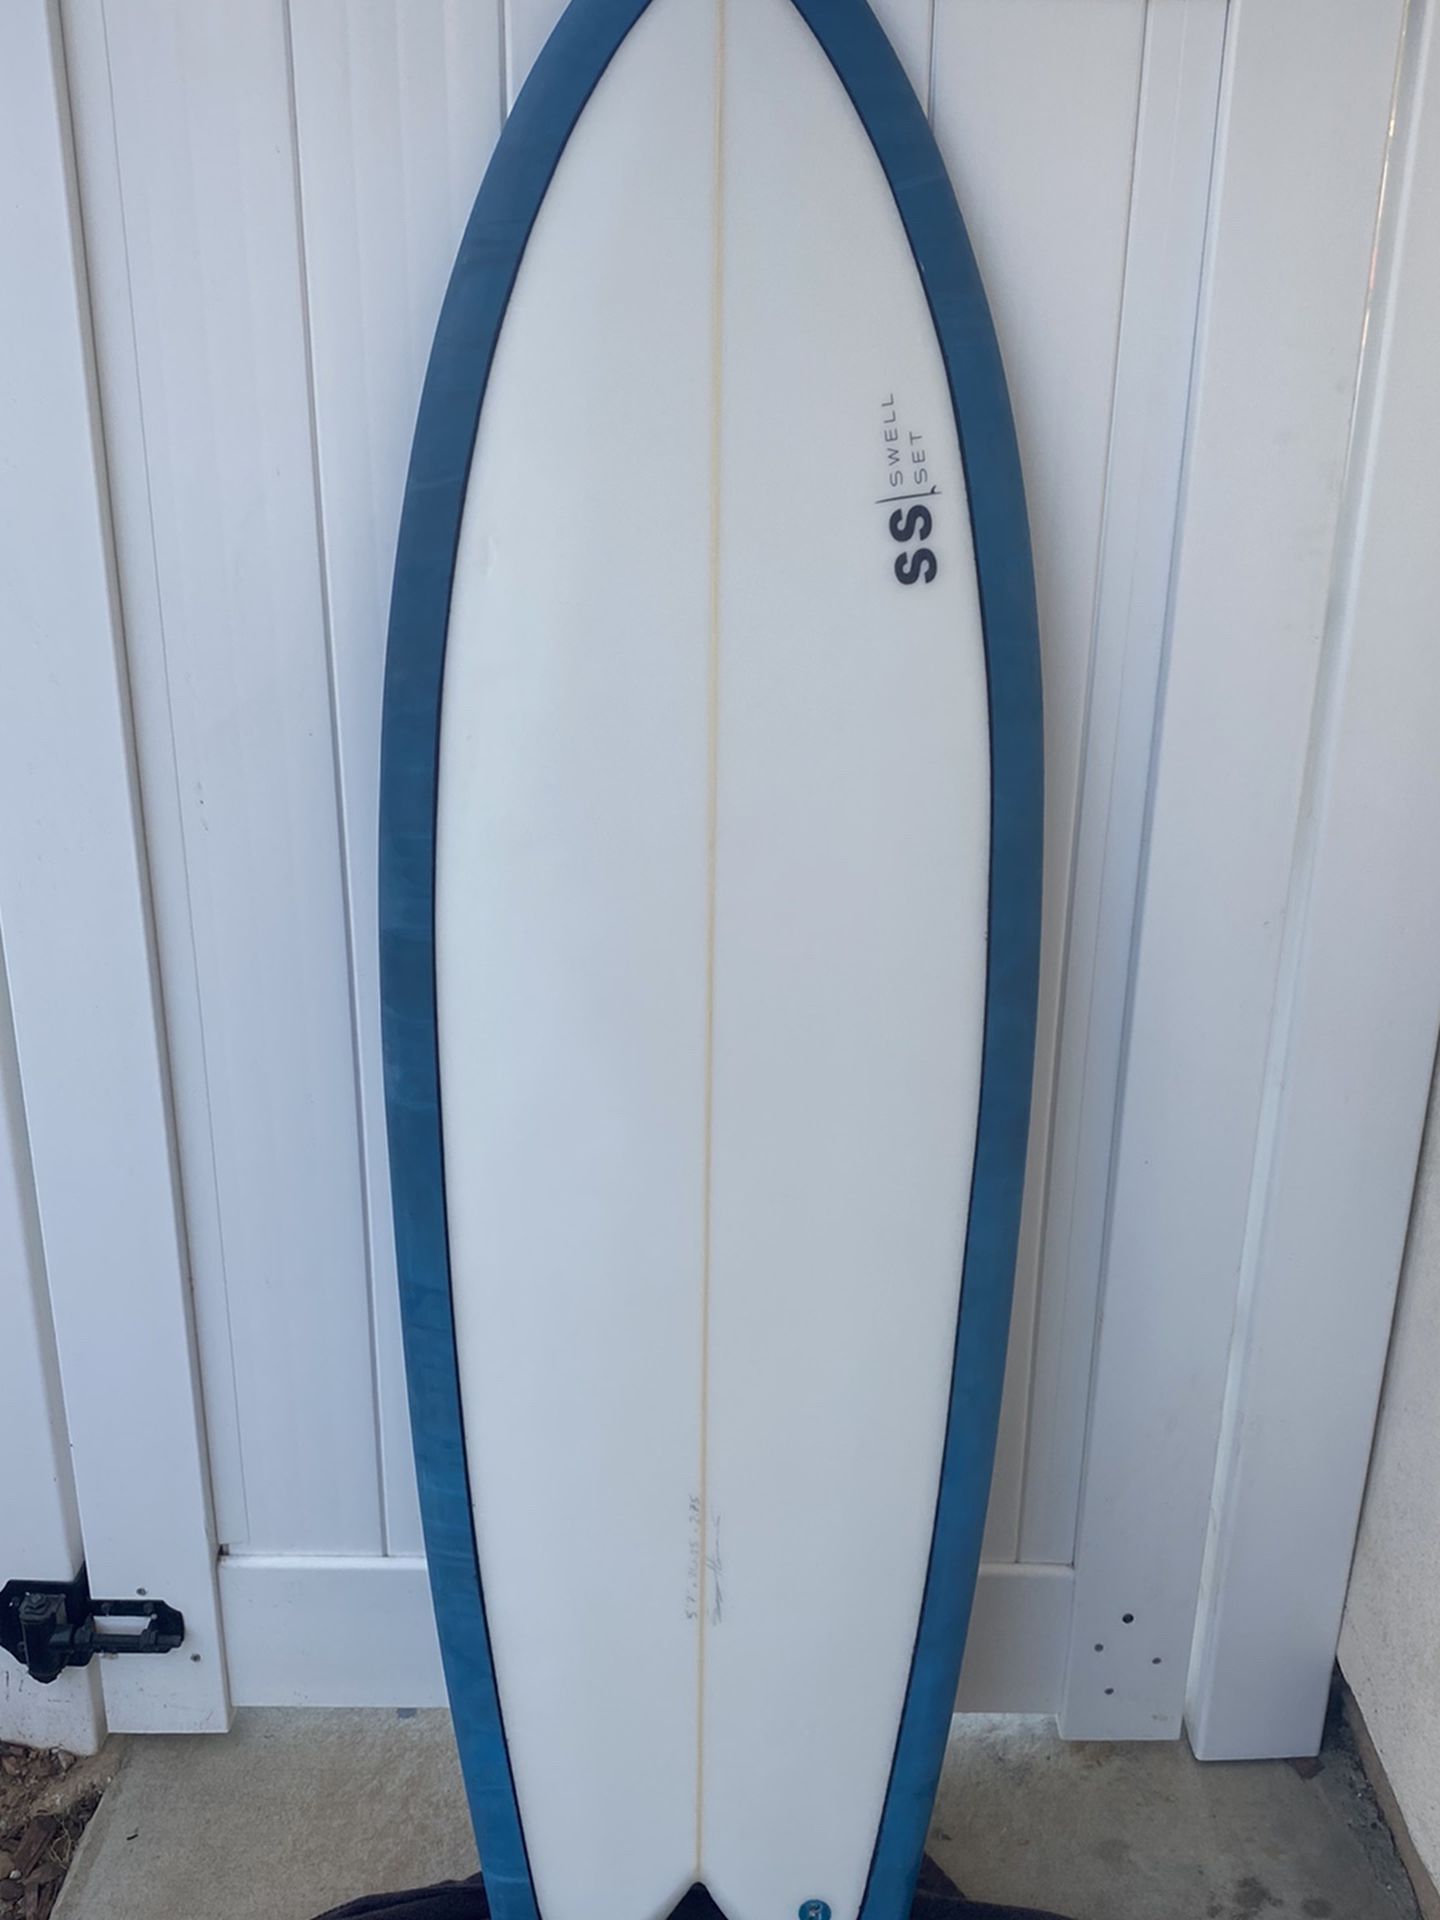 5’7” Swell Set Fish Surfboard